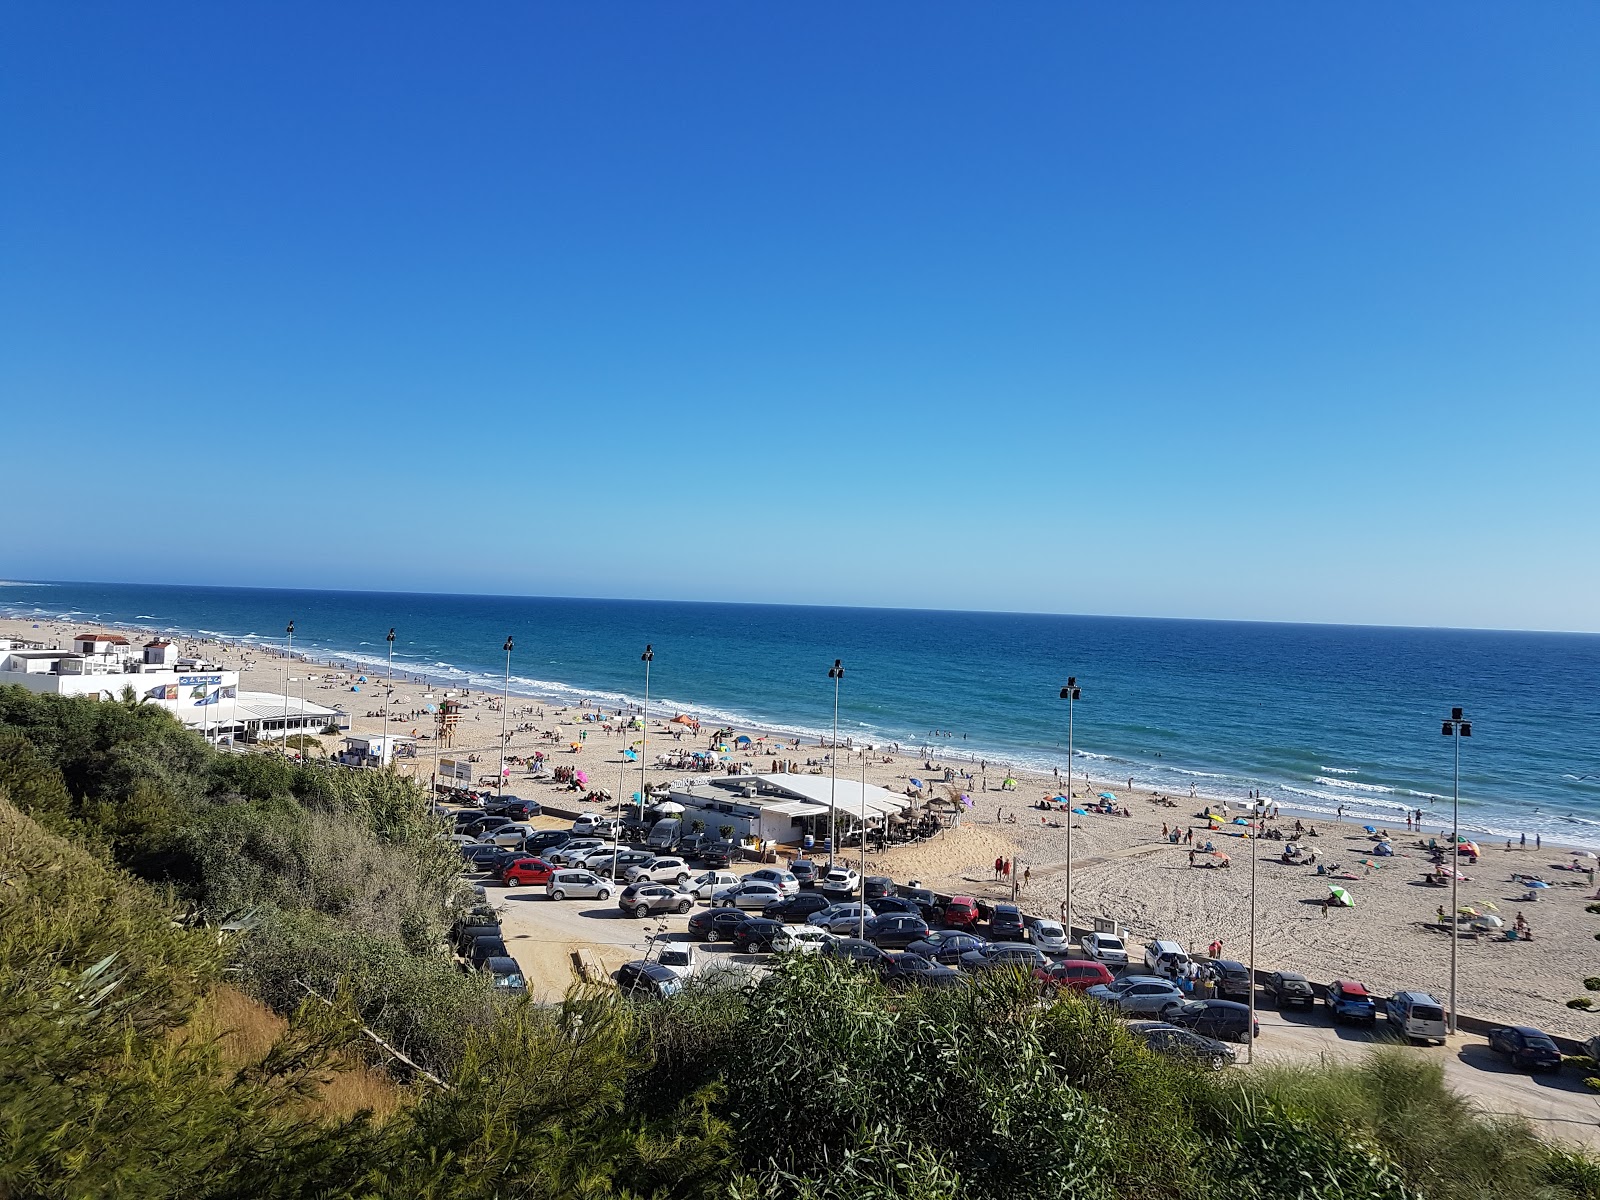 Valokuva Playa de la Fontanilla En Conilista. pinnalla kirkas hiekka:n kanssa